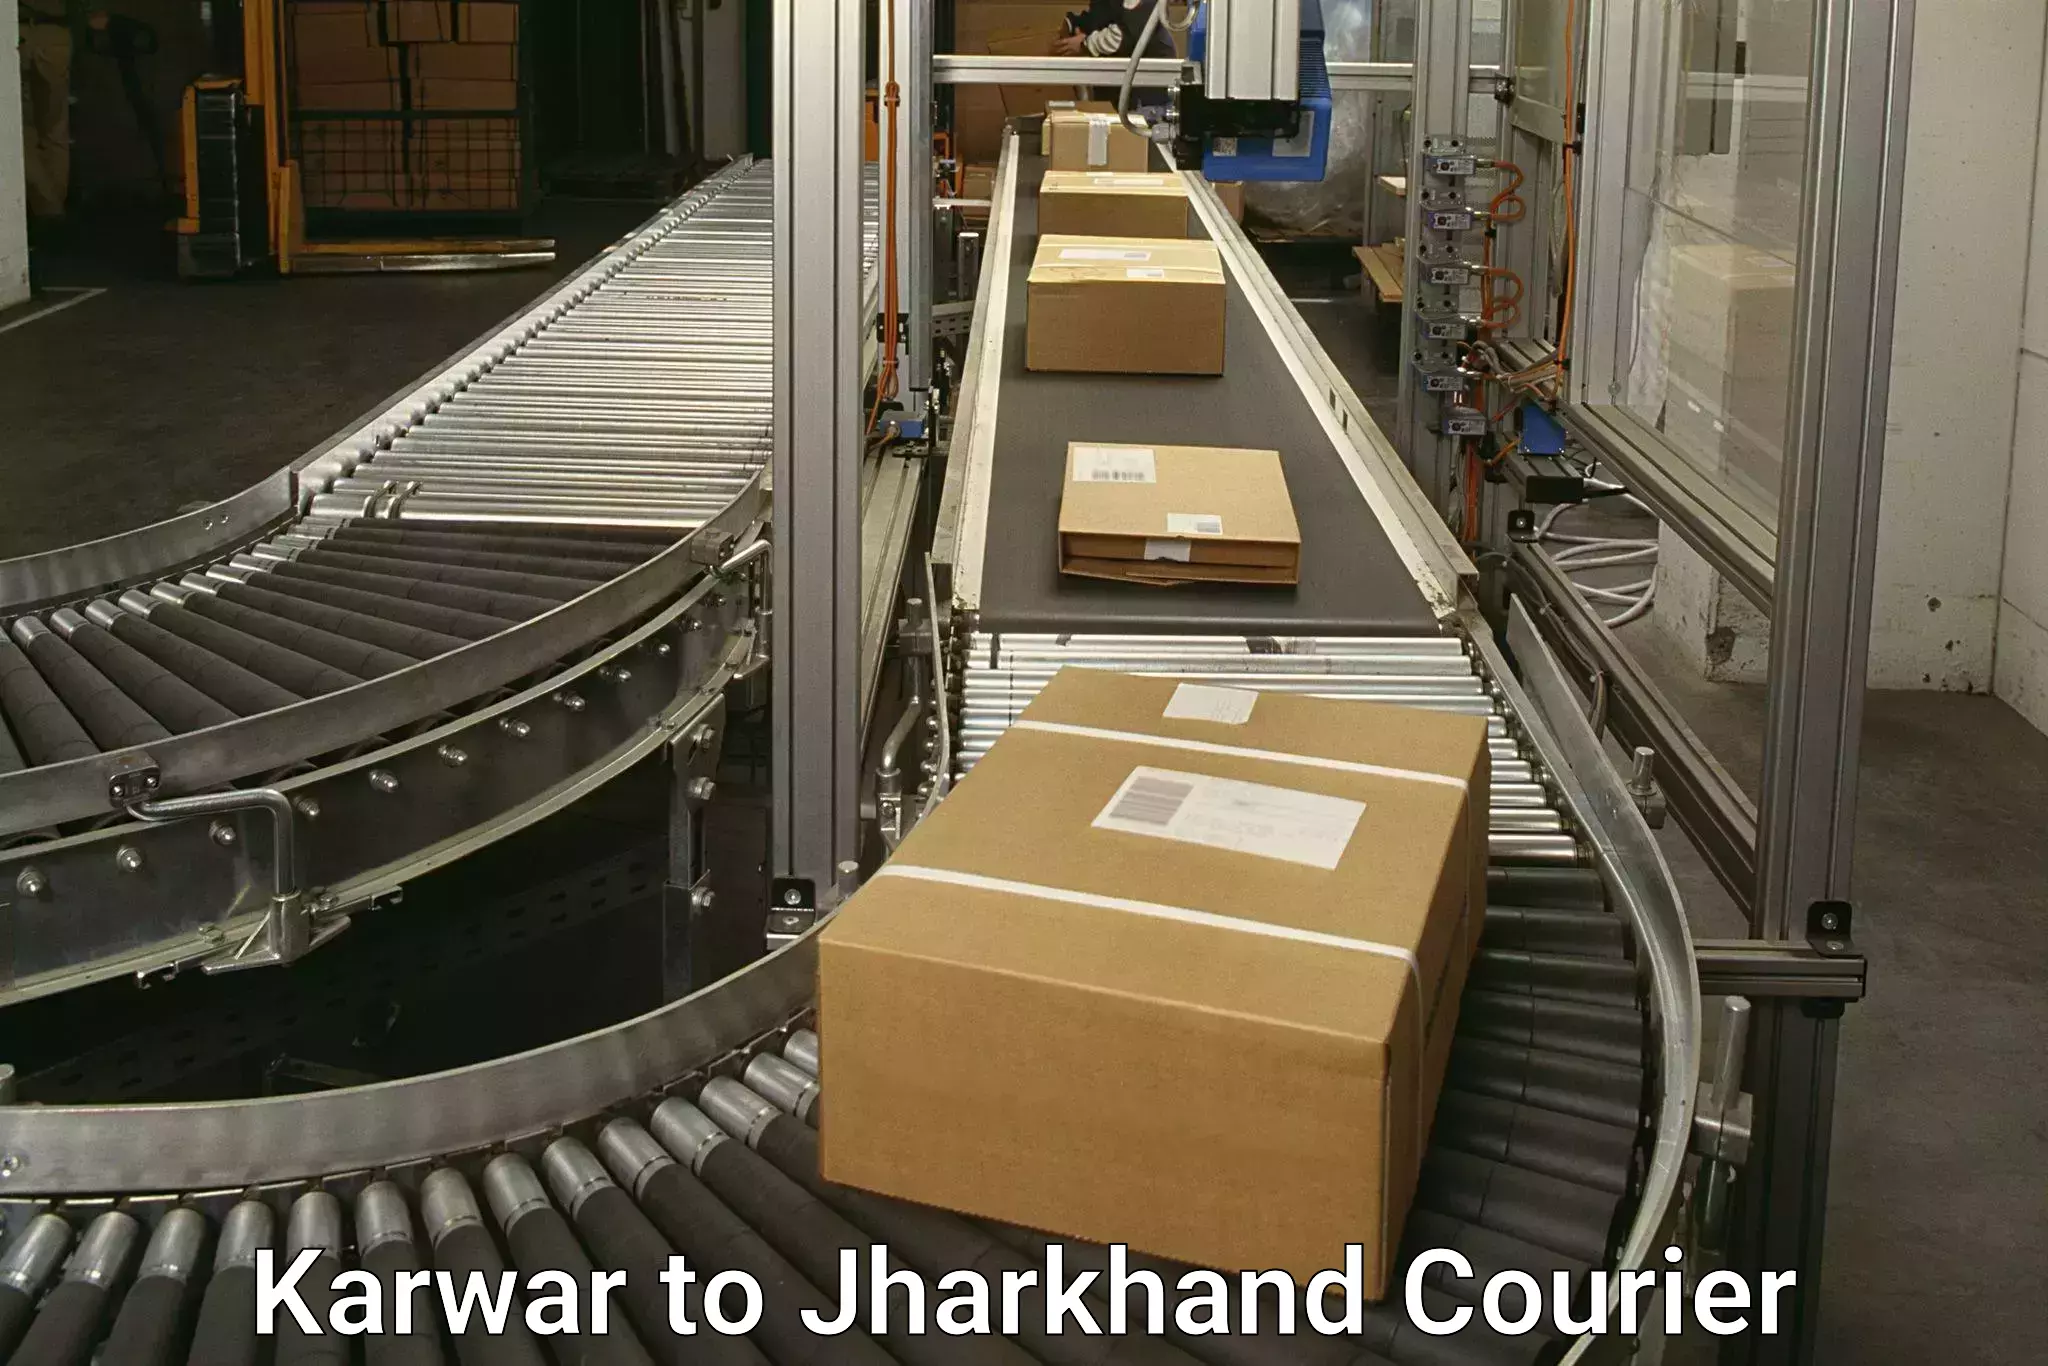 Courier service innovation in Karwar to Latehar